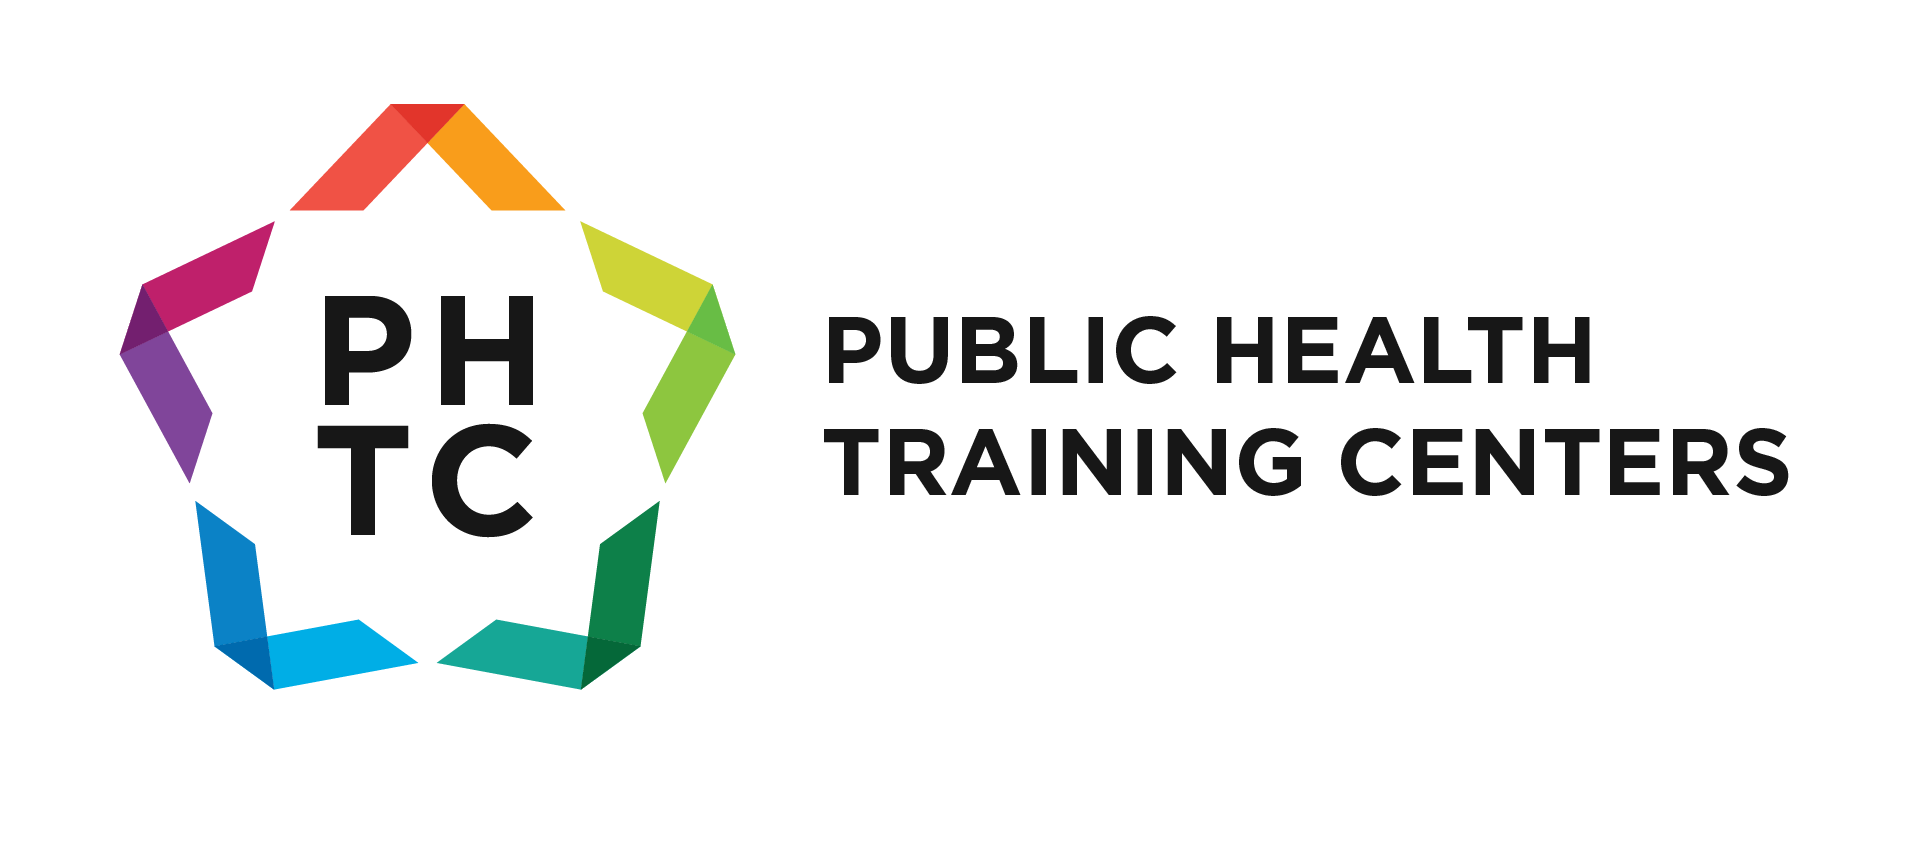 PHTC Public Health Training Center Logo